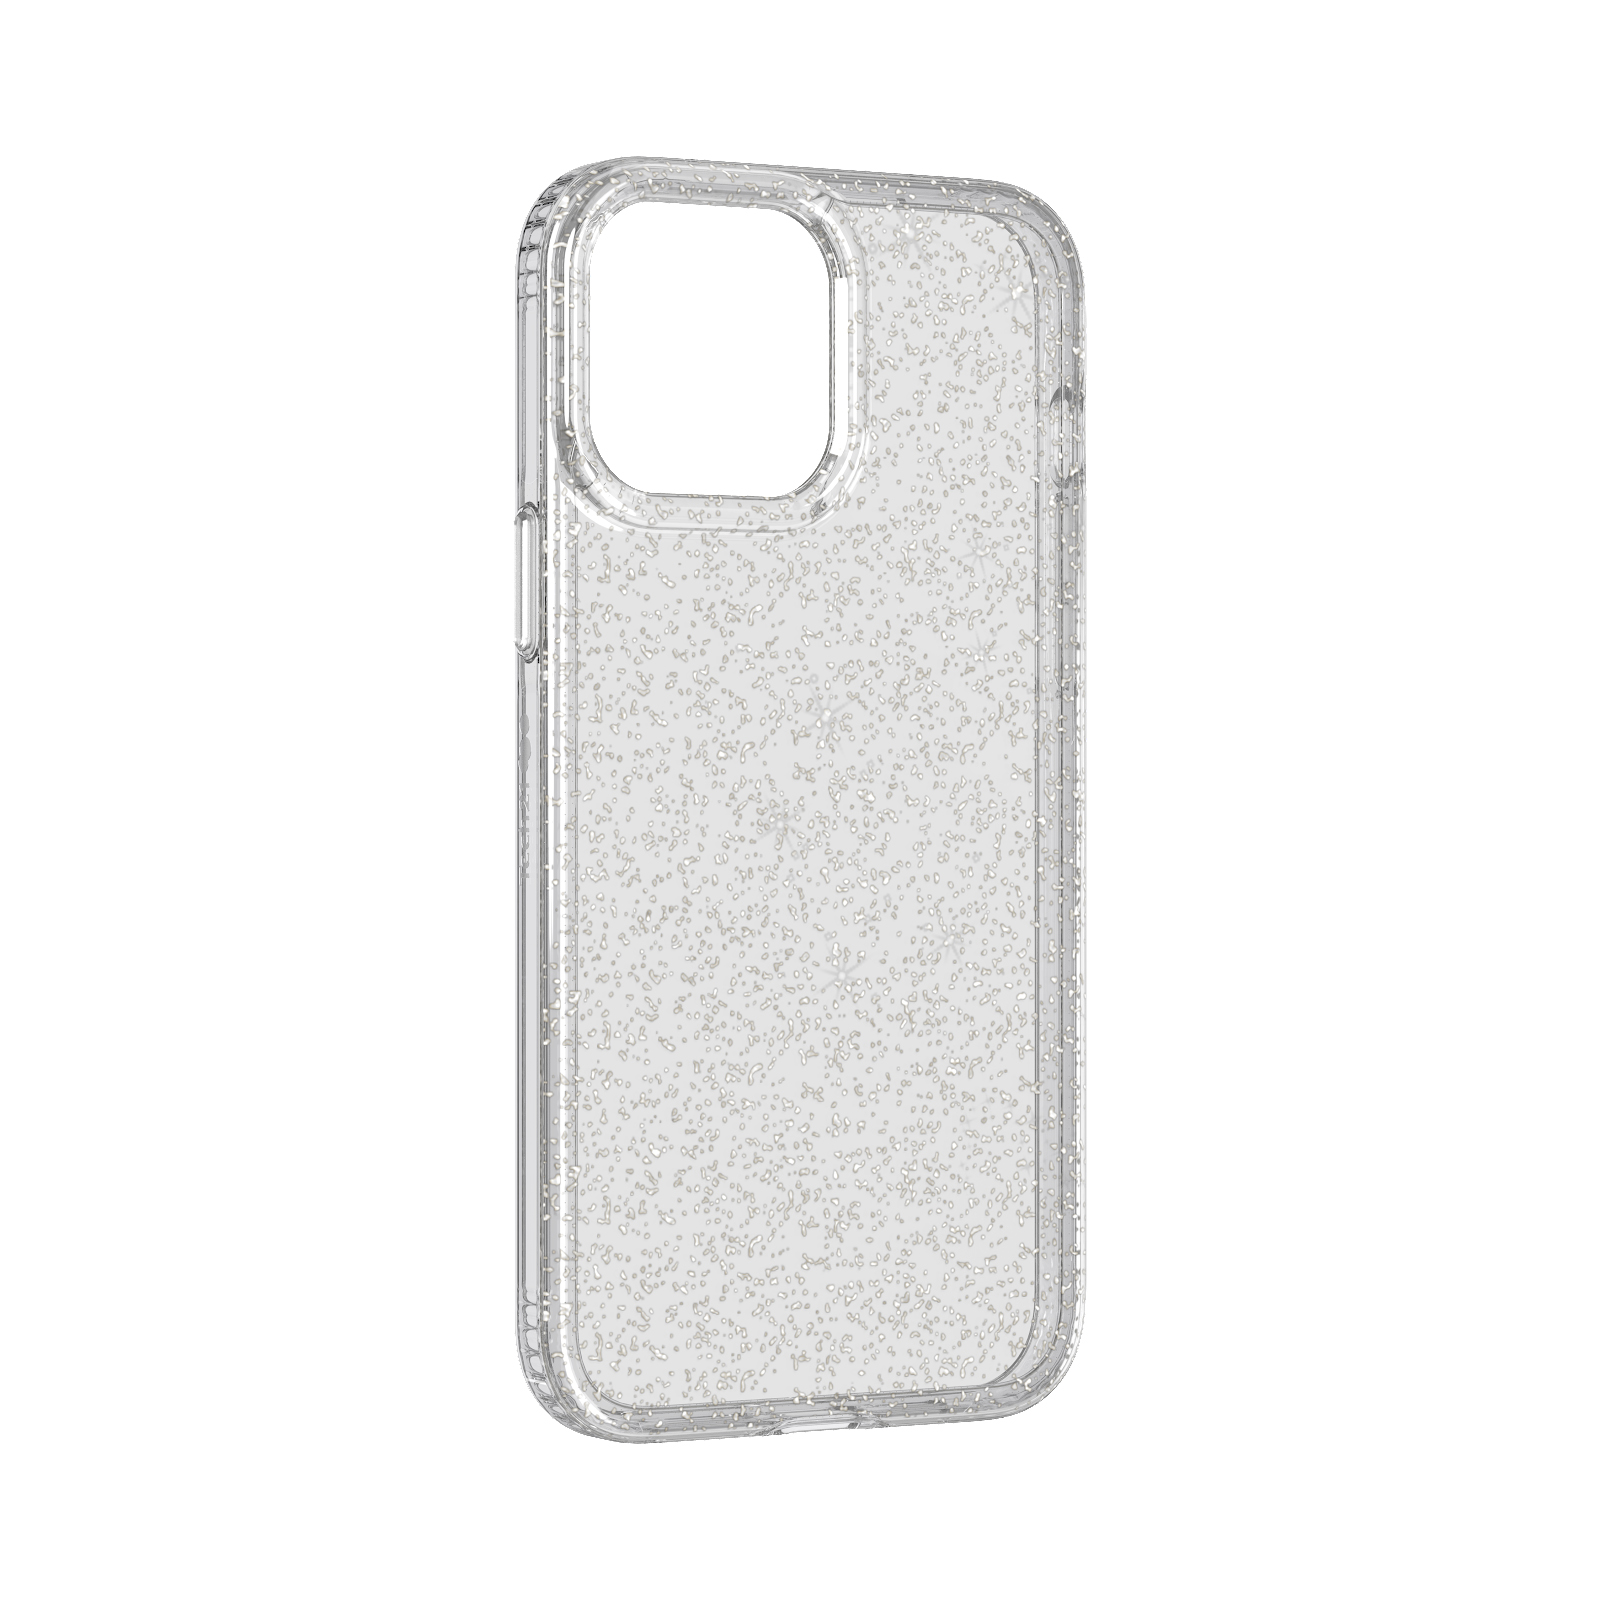 Tech21 Evo Sparkle for iPhone 13 Pro Max (Silver)